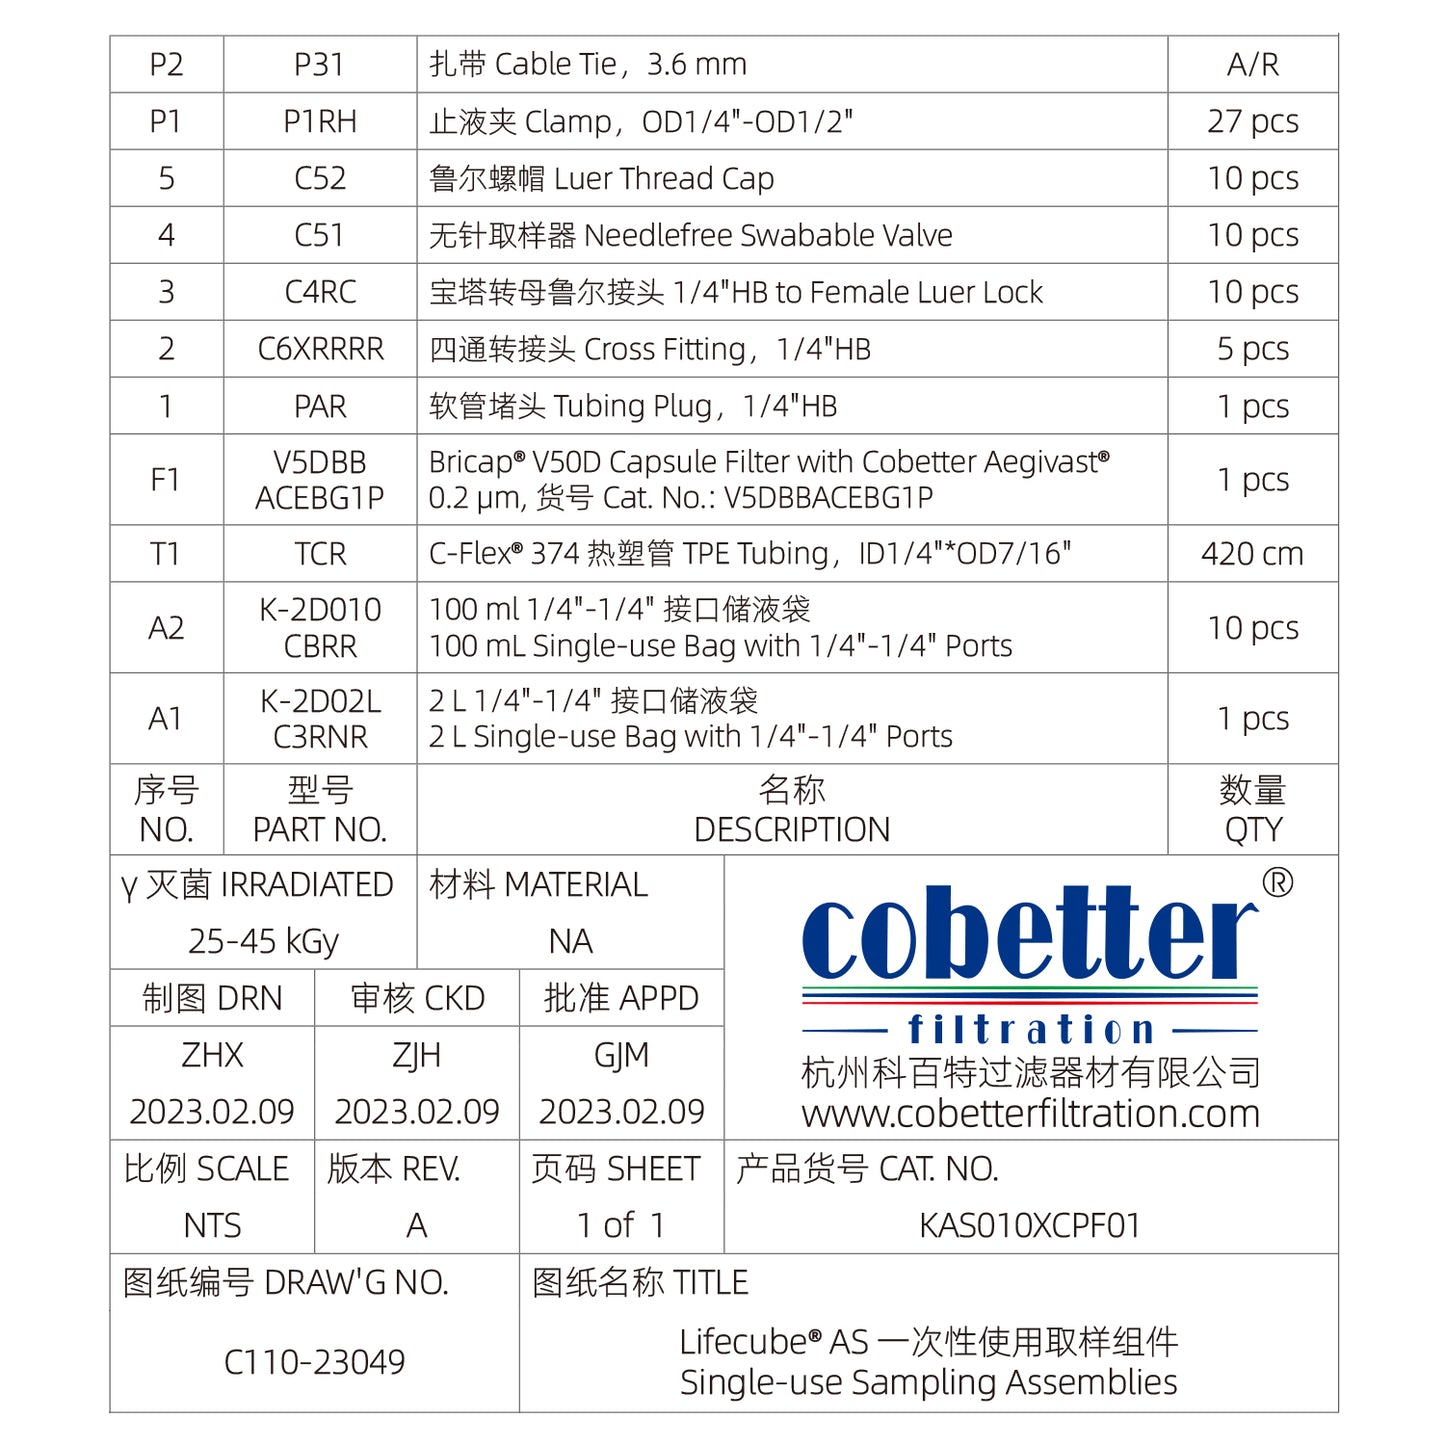 Cobetter Lifecube® Multi-sampling Bags Pre-sterile - Standard Configuration I